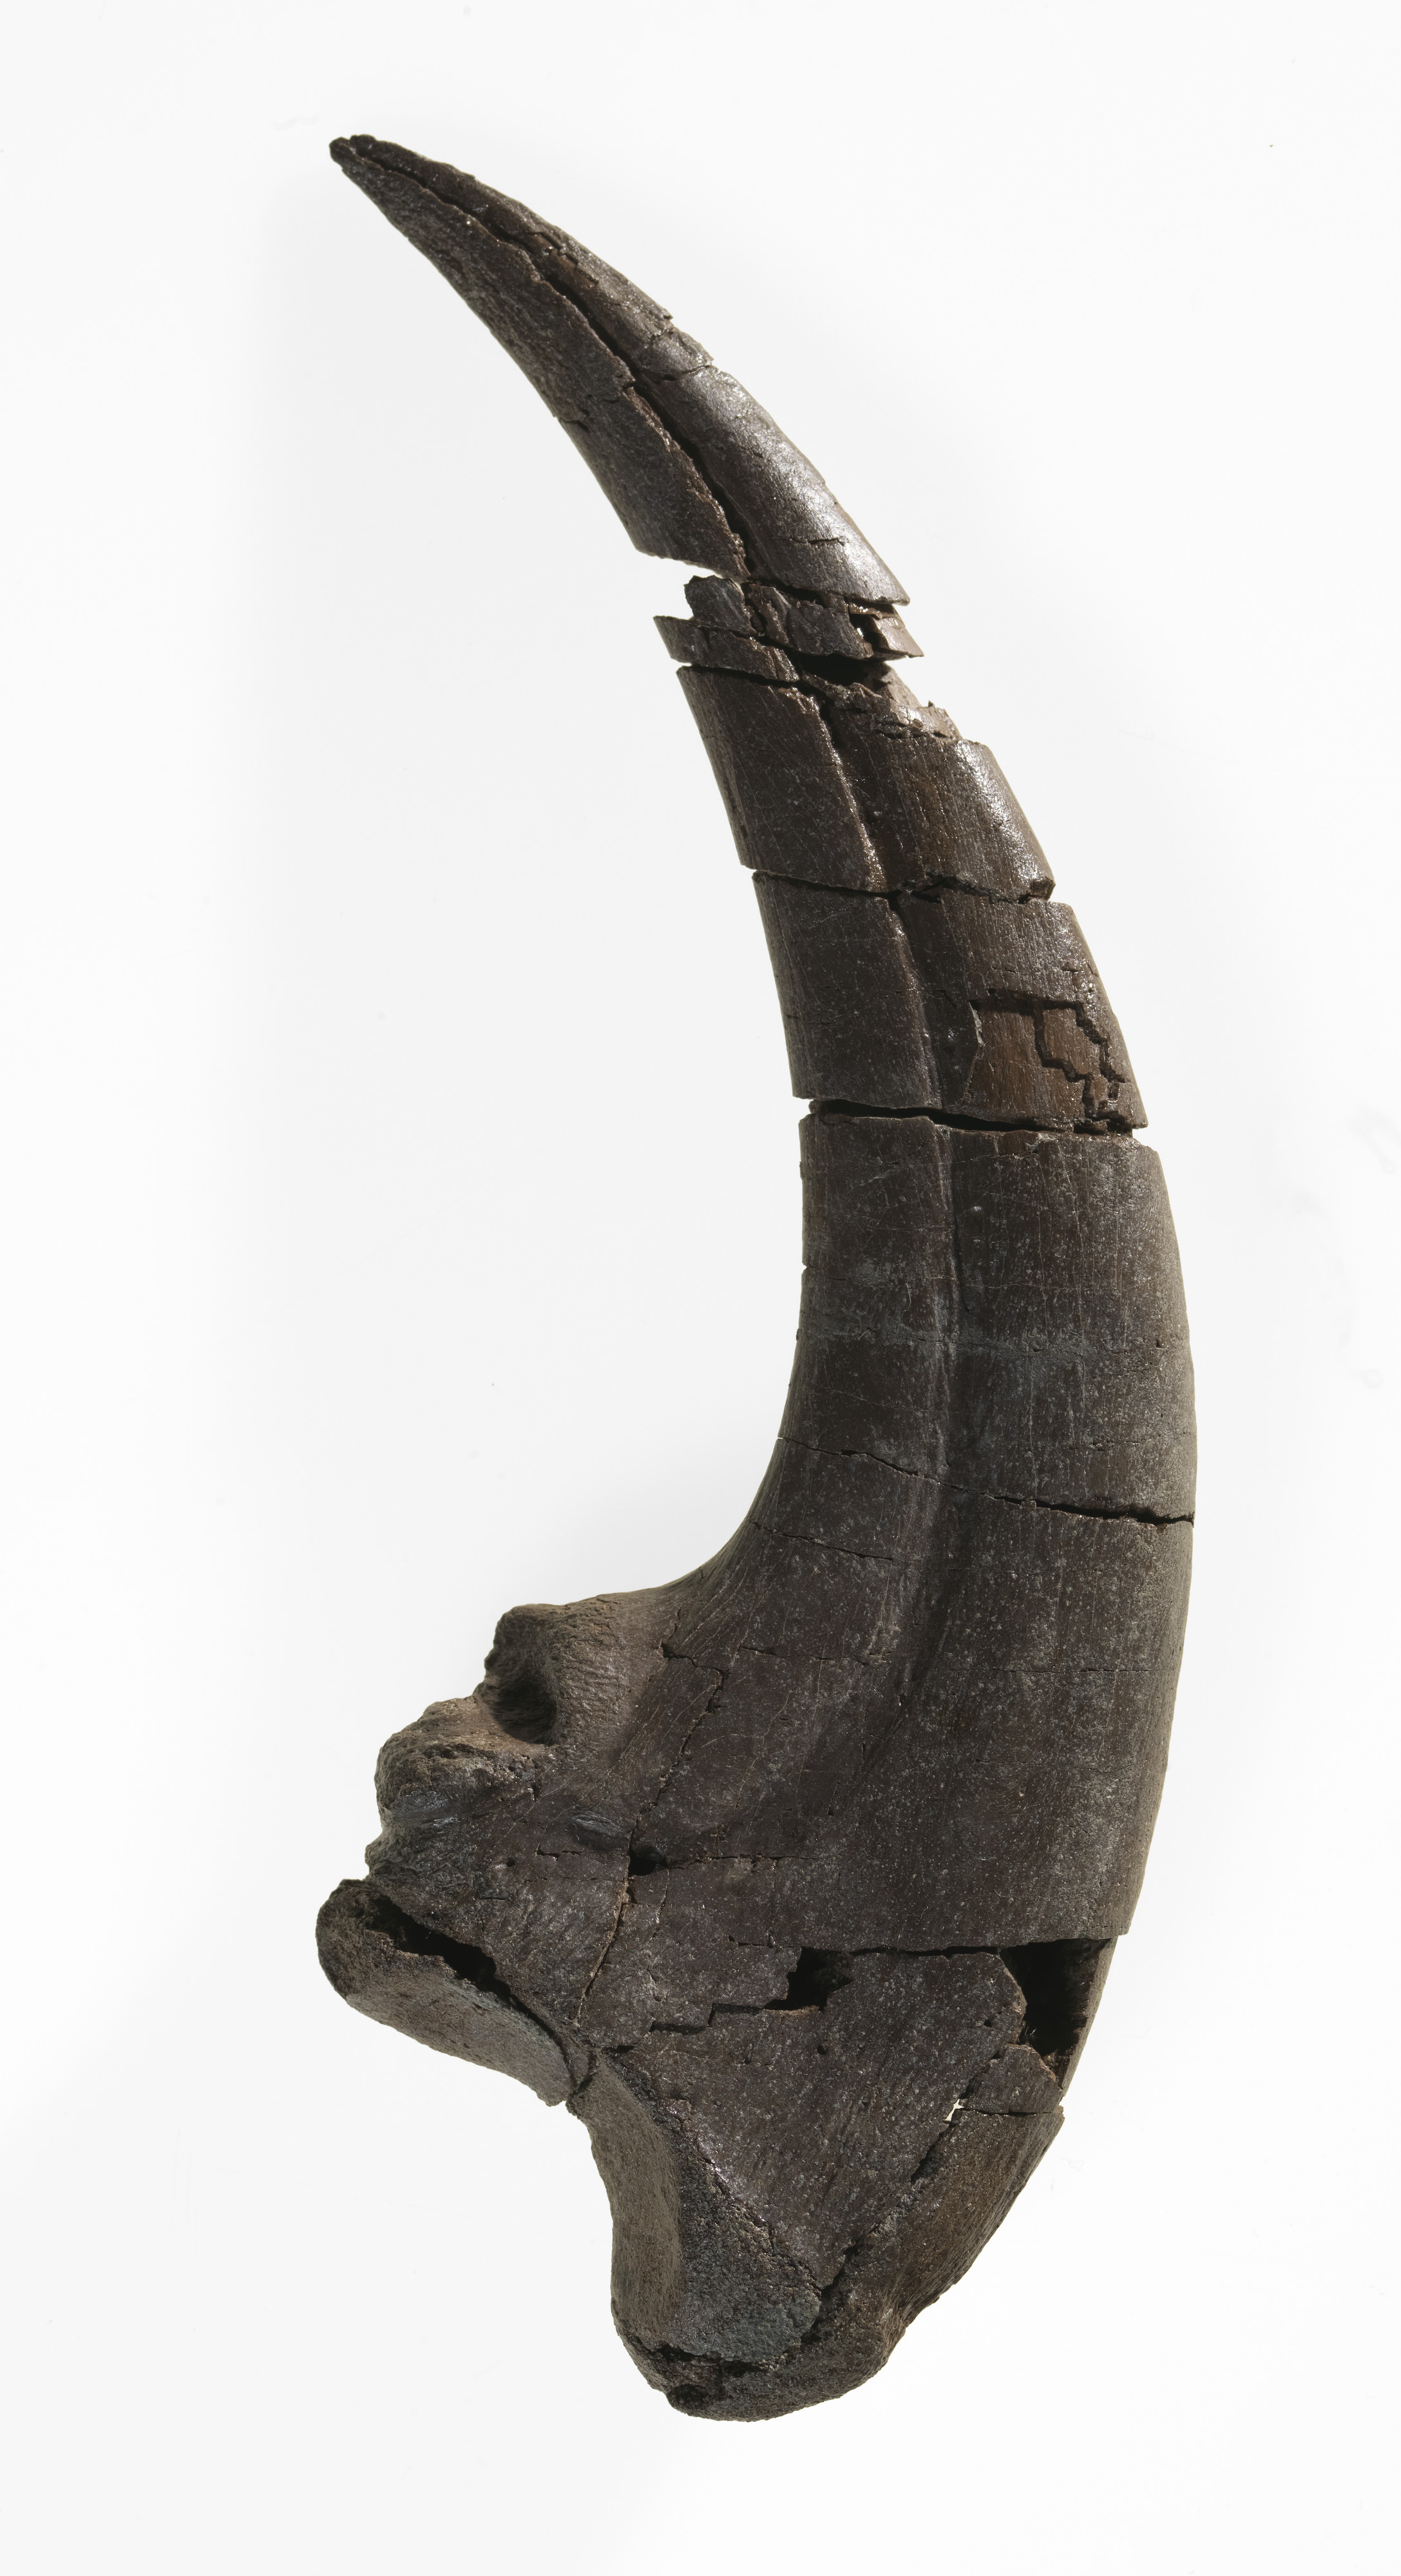 Australovenator dinosaur claw. Source - Museums Victoria. Photographer - Benjamin Healley